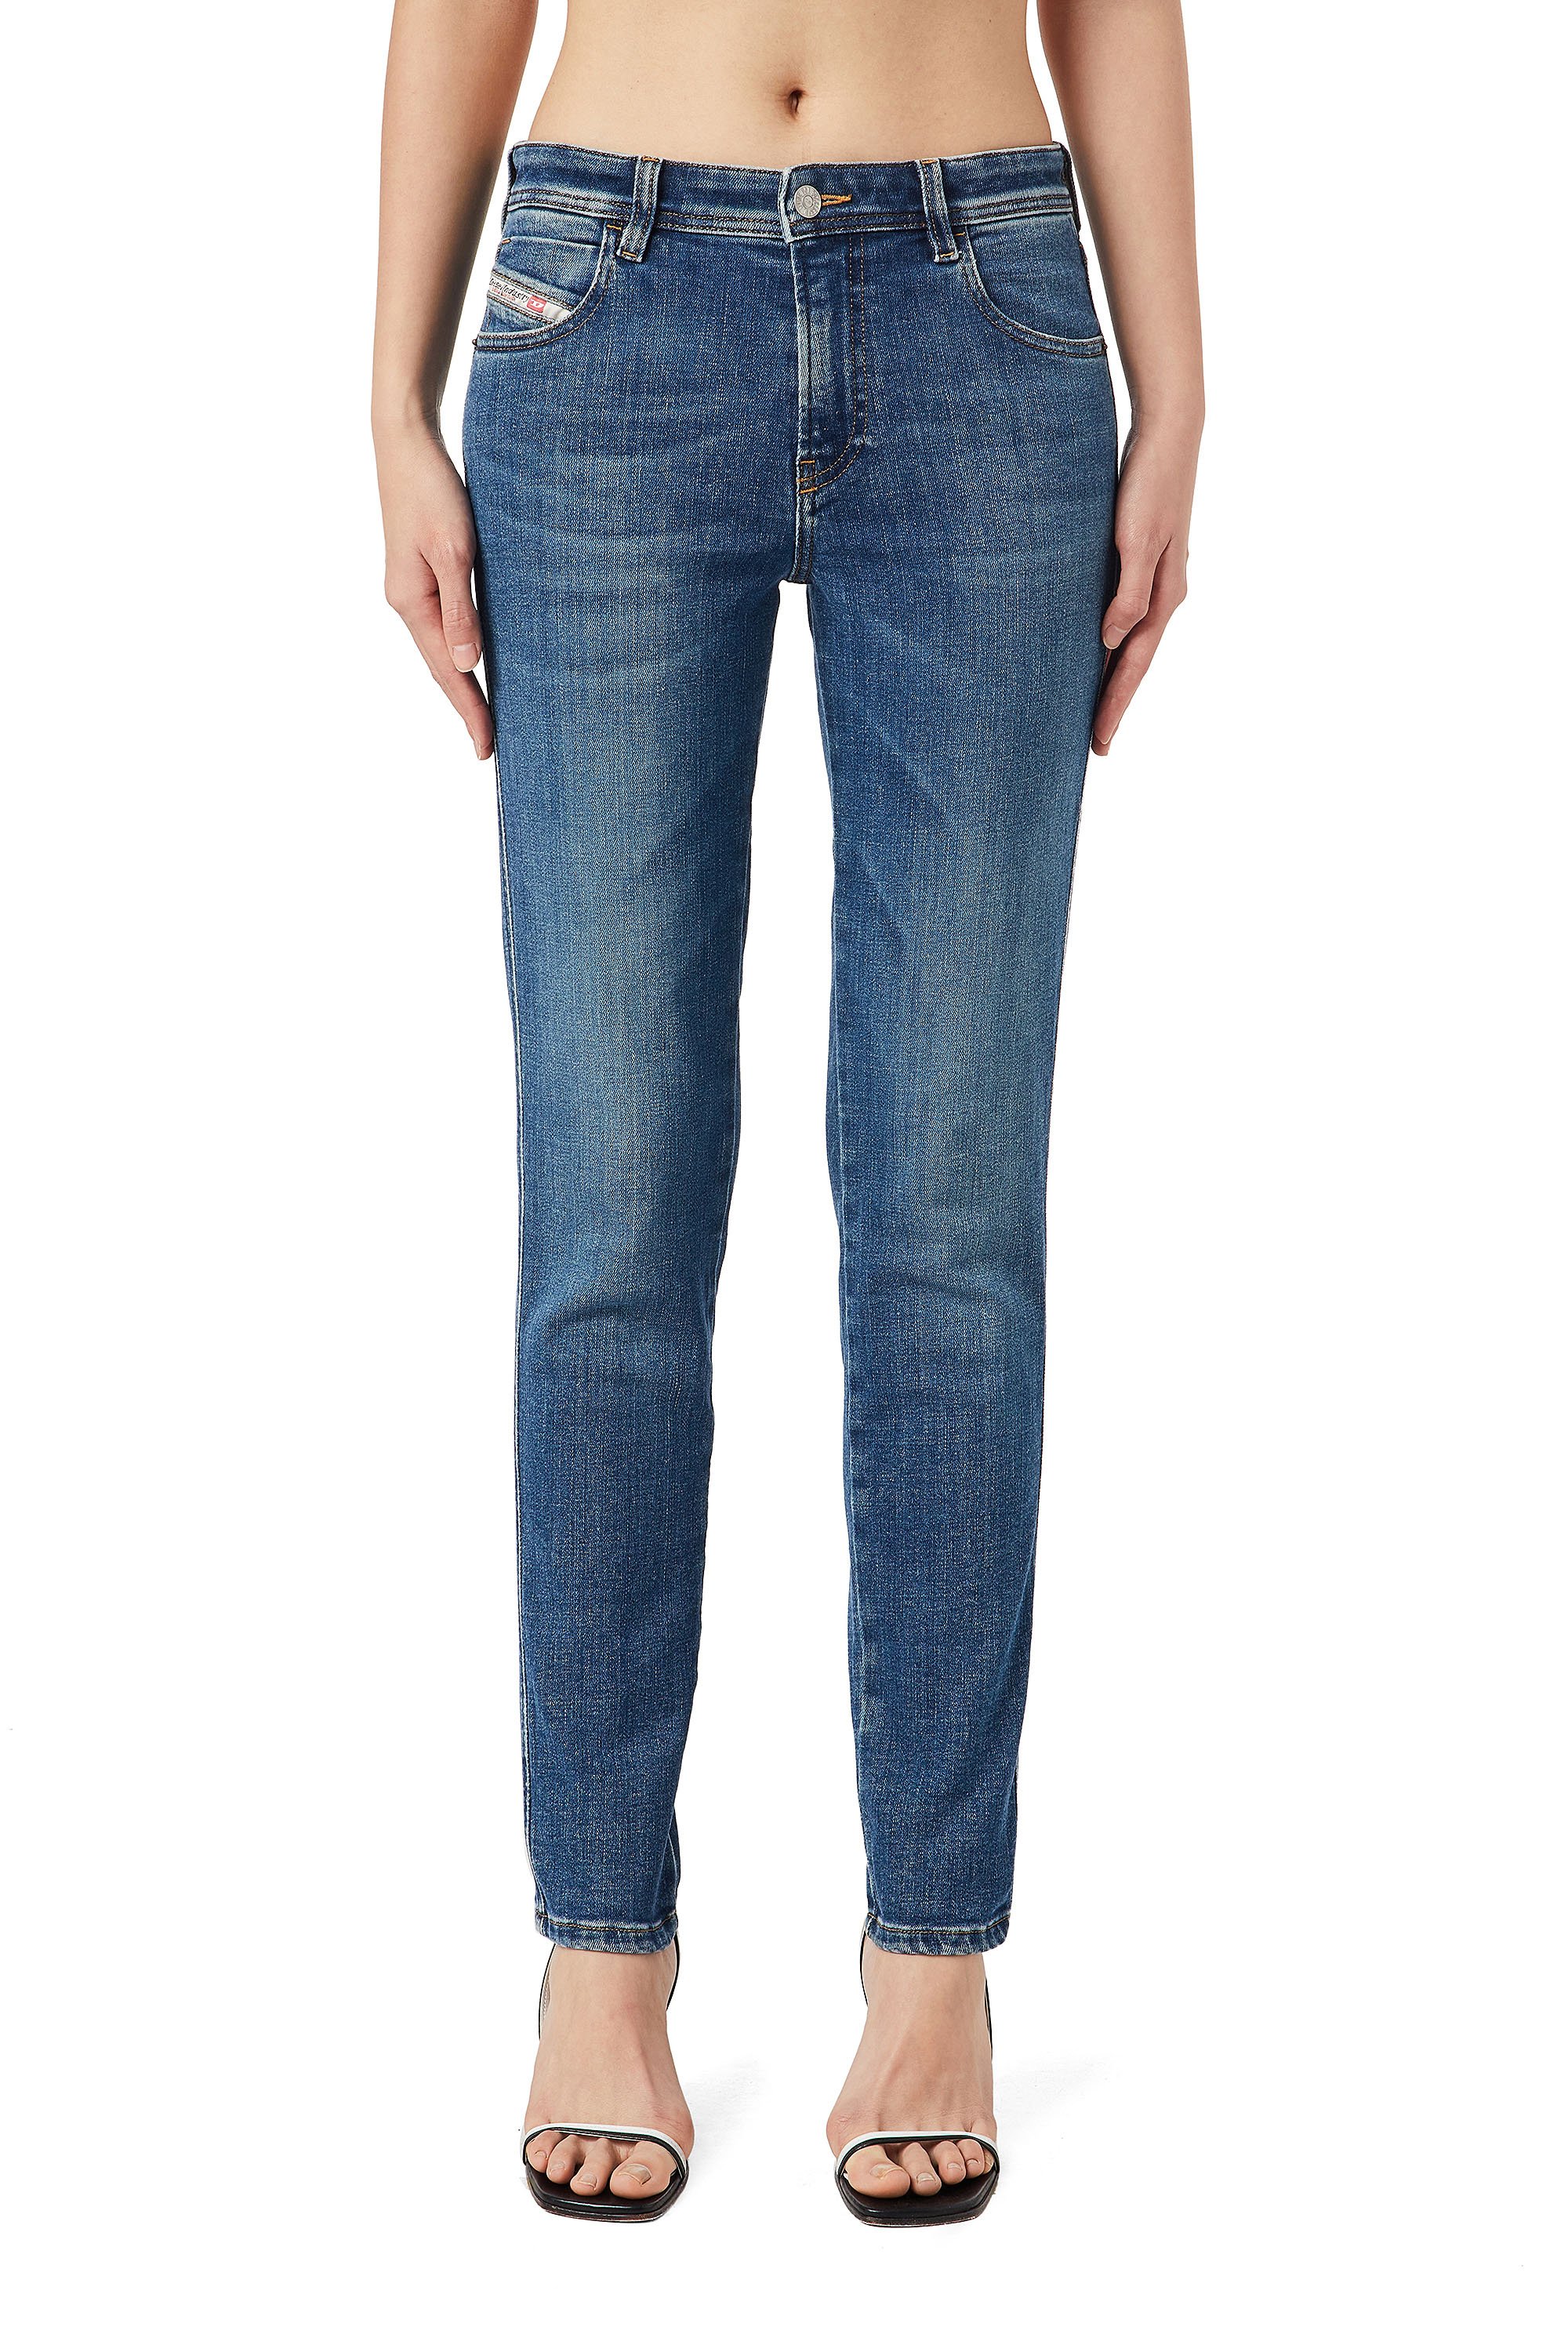 2015 BABHILA 09C59 Skinny Jeans, Mittelblau - Jeans